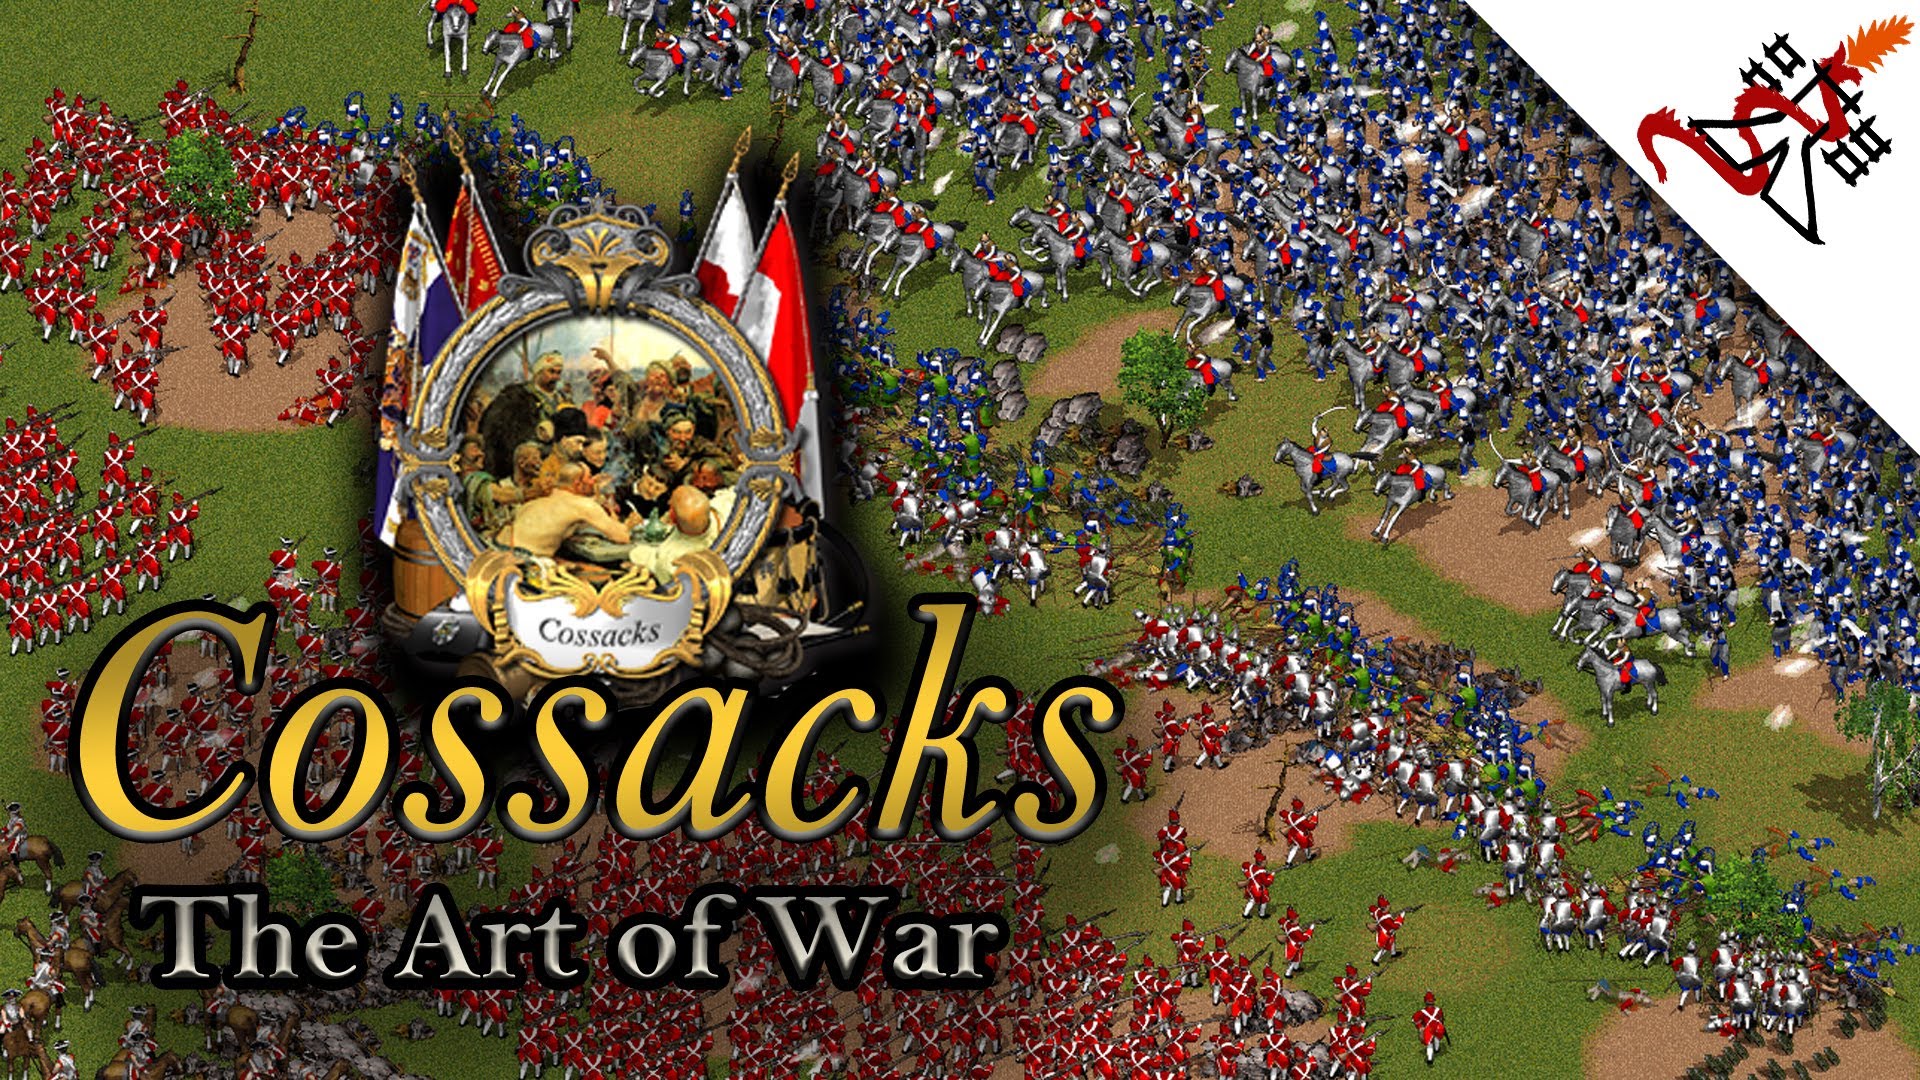 cossacks european wars campaign guide